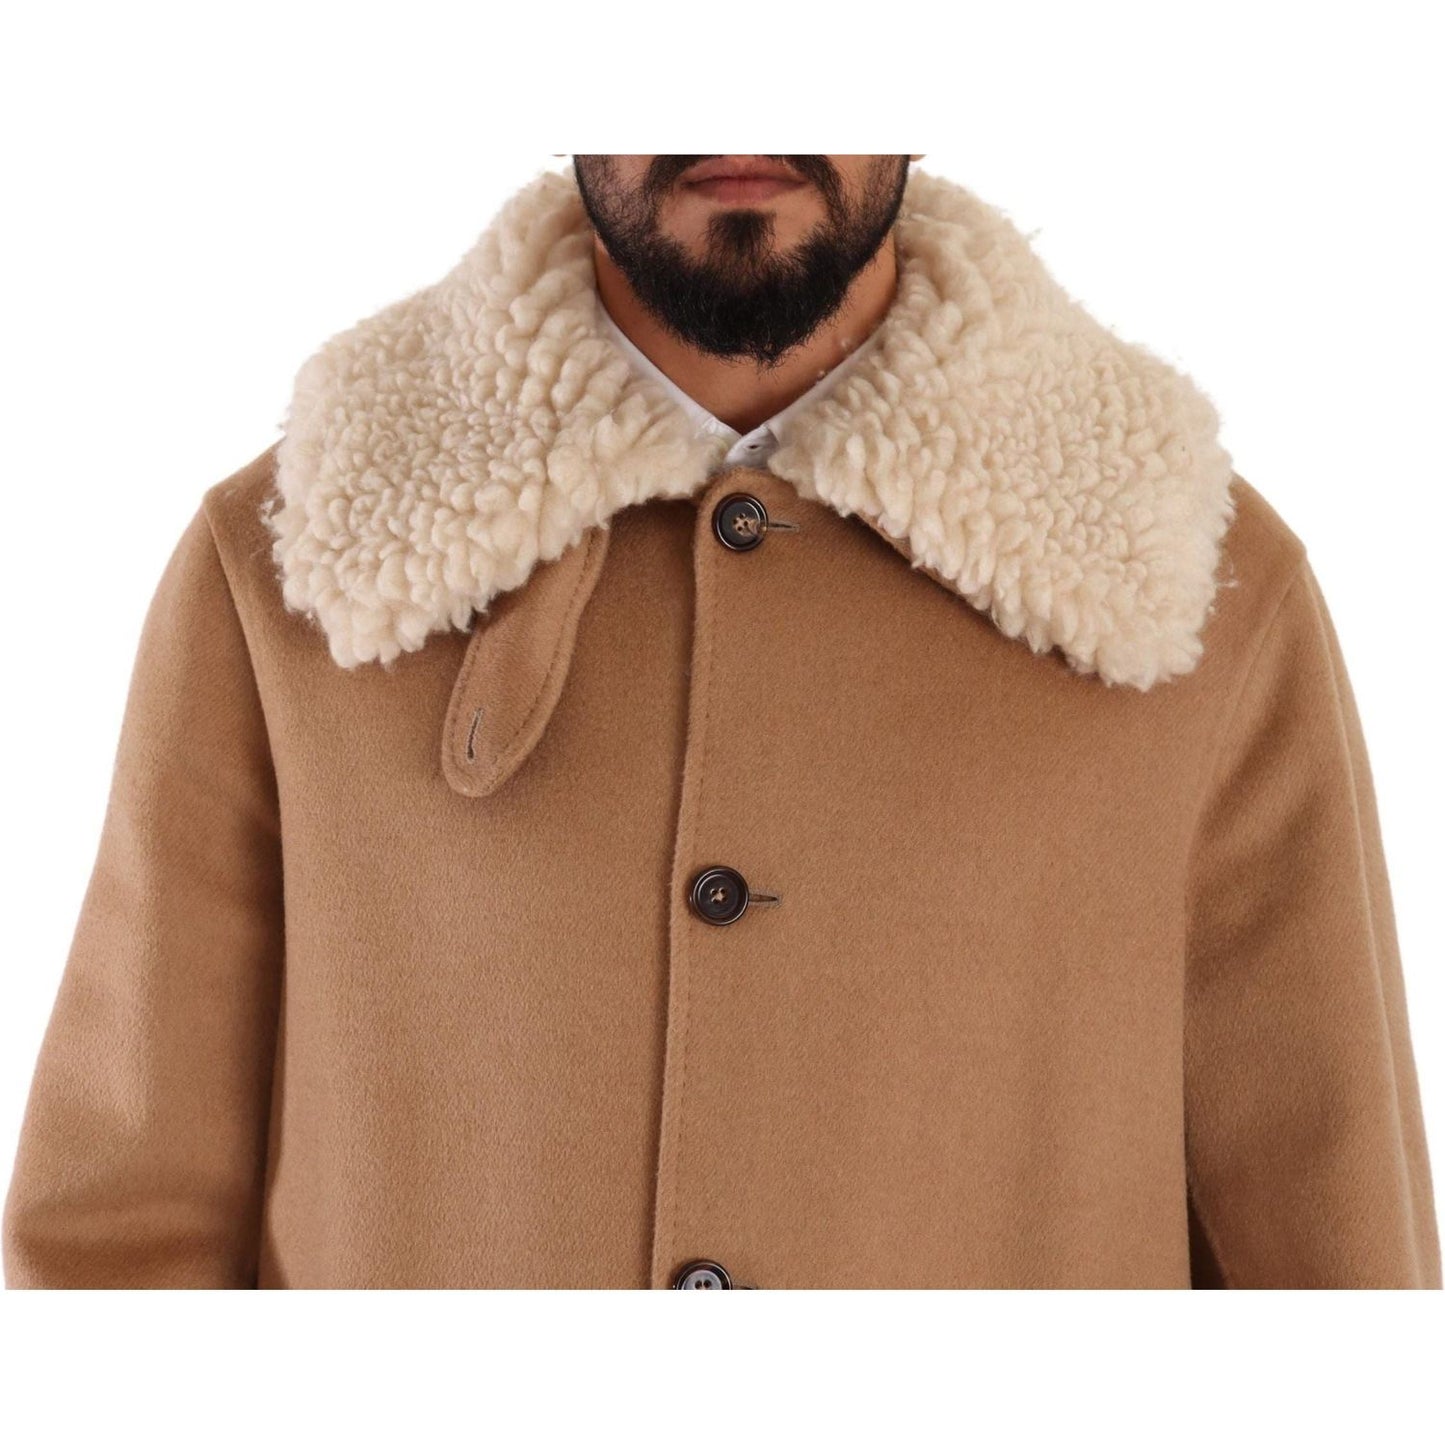 Dolce & Gabbana Opulent Beige Shearling-Collar Overcoat beige-camel-skin-cashmere-shearling-overcoat-jacket IMG_5028-scaled-da1b66a2-be1.jpg